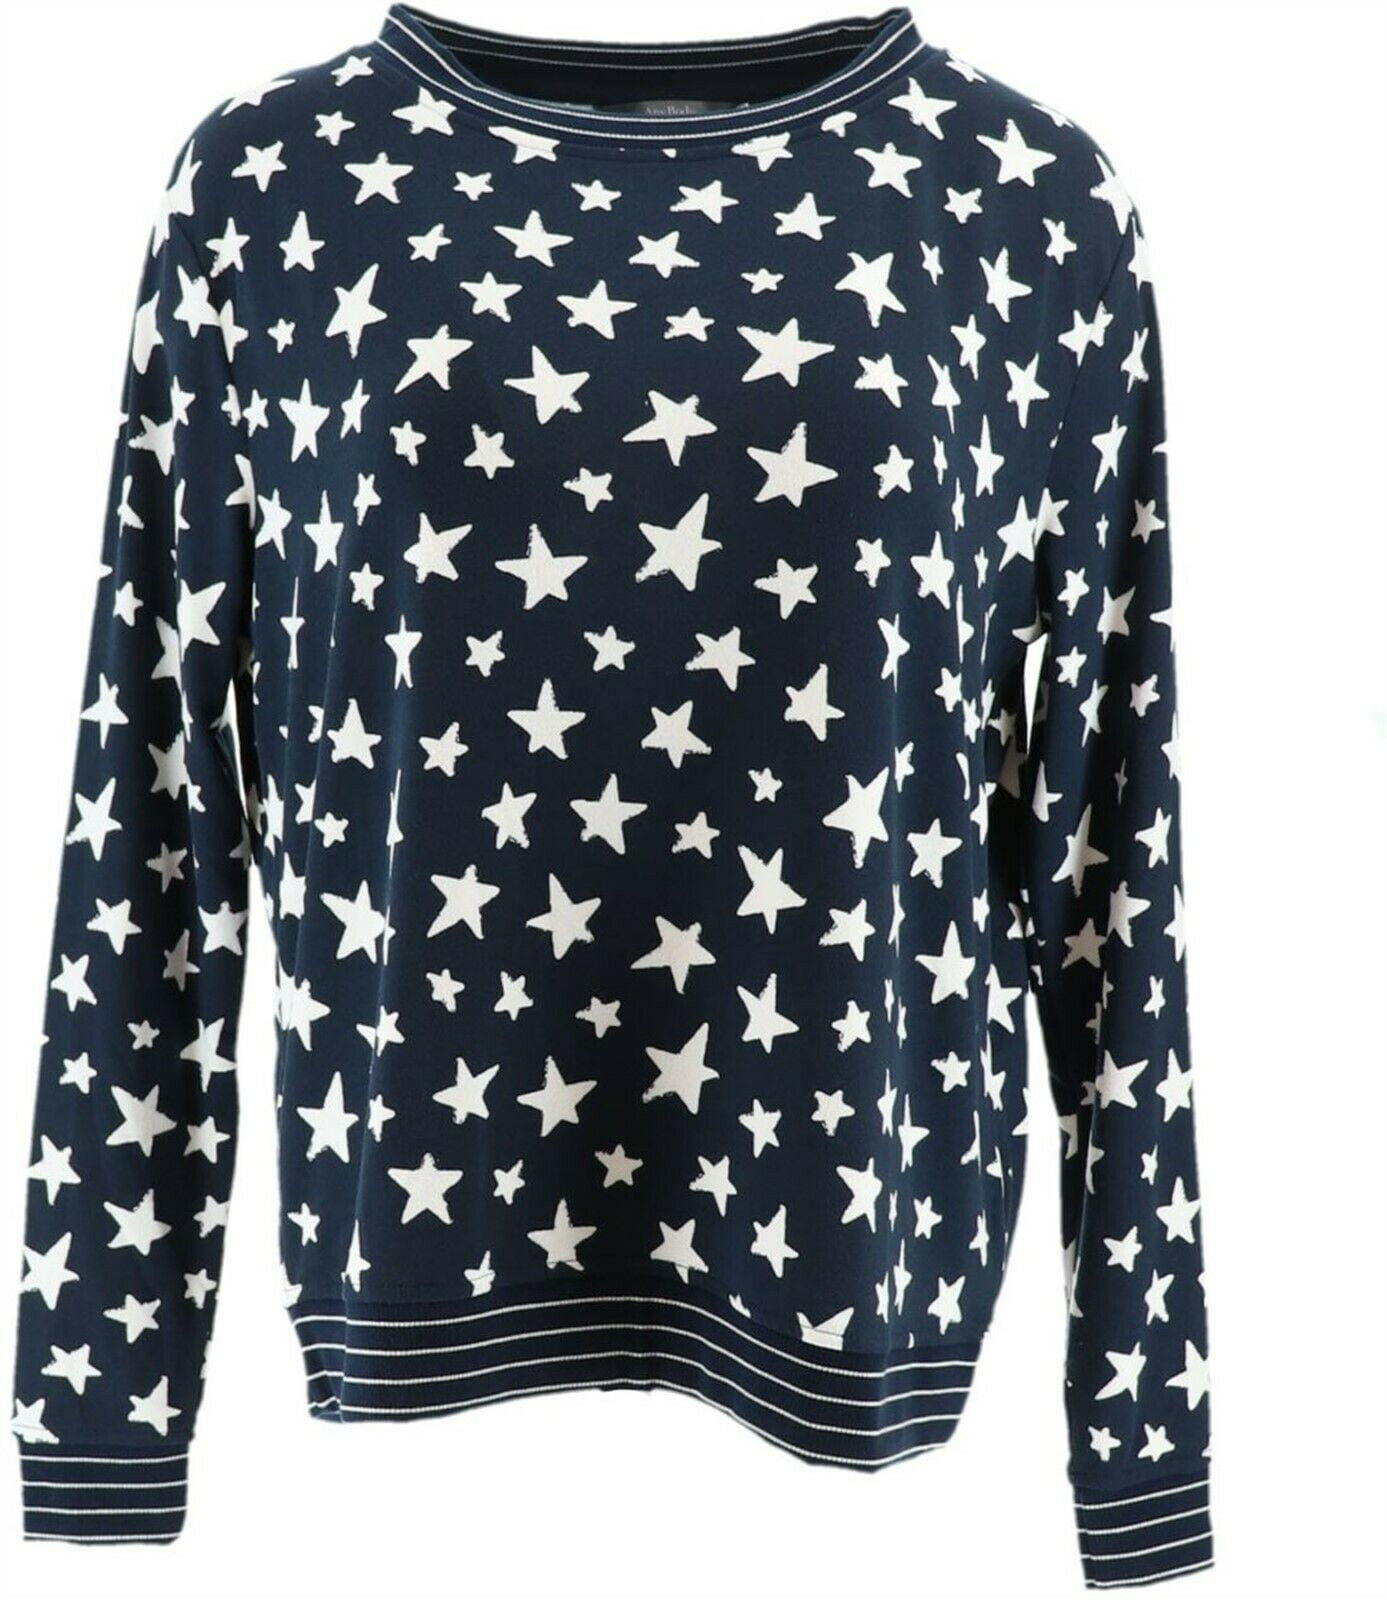 AnyBody Loungewear Printed Hacci Sweatshirt Navy Star L NEW A302193 